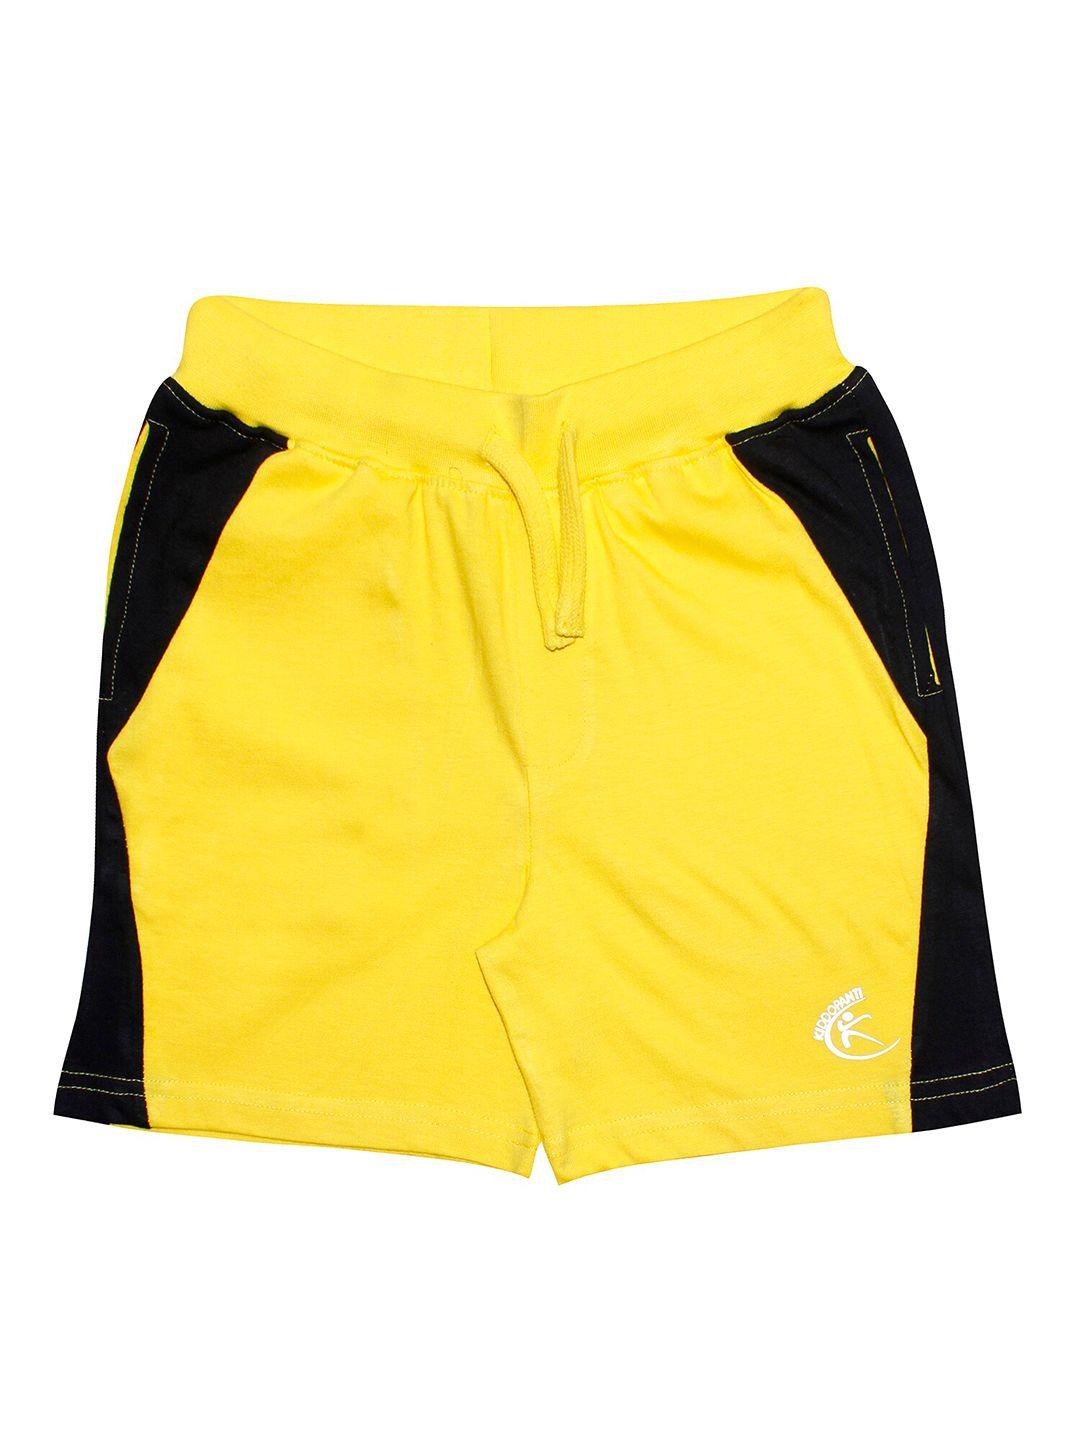 kiddopanti boys yellow colorblocked shorts